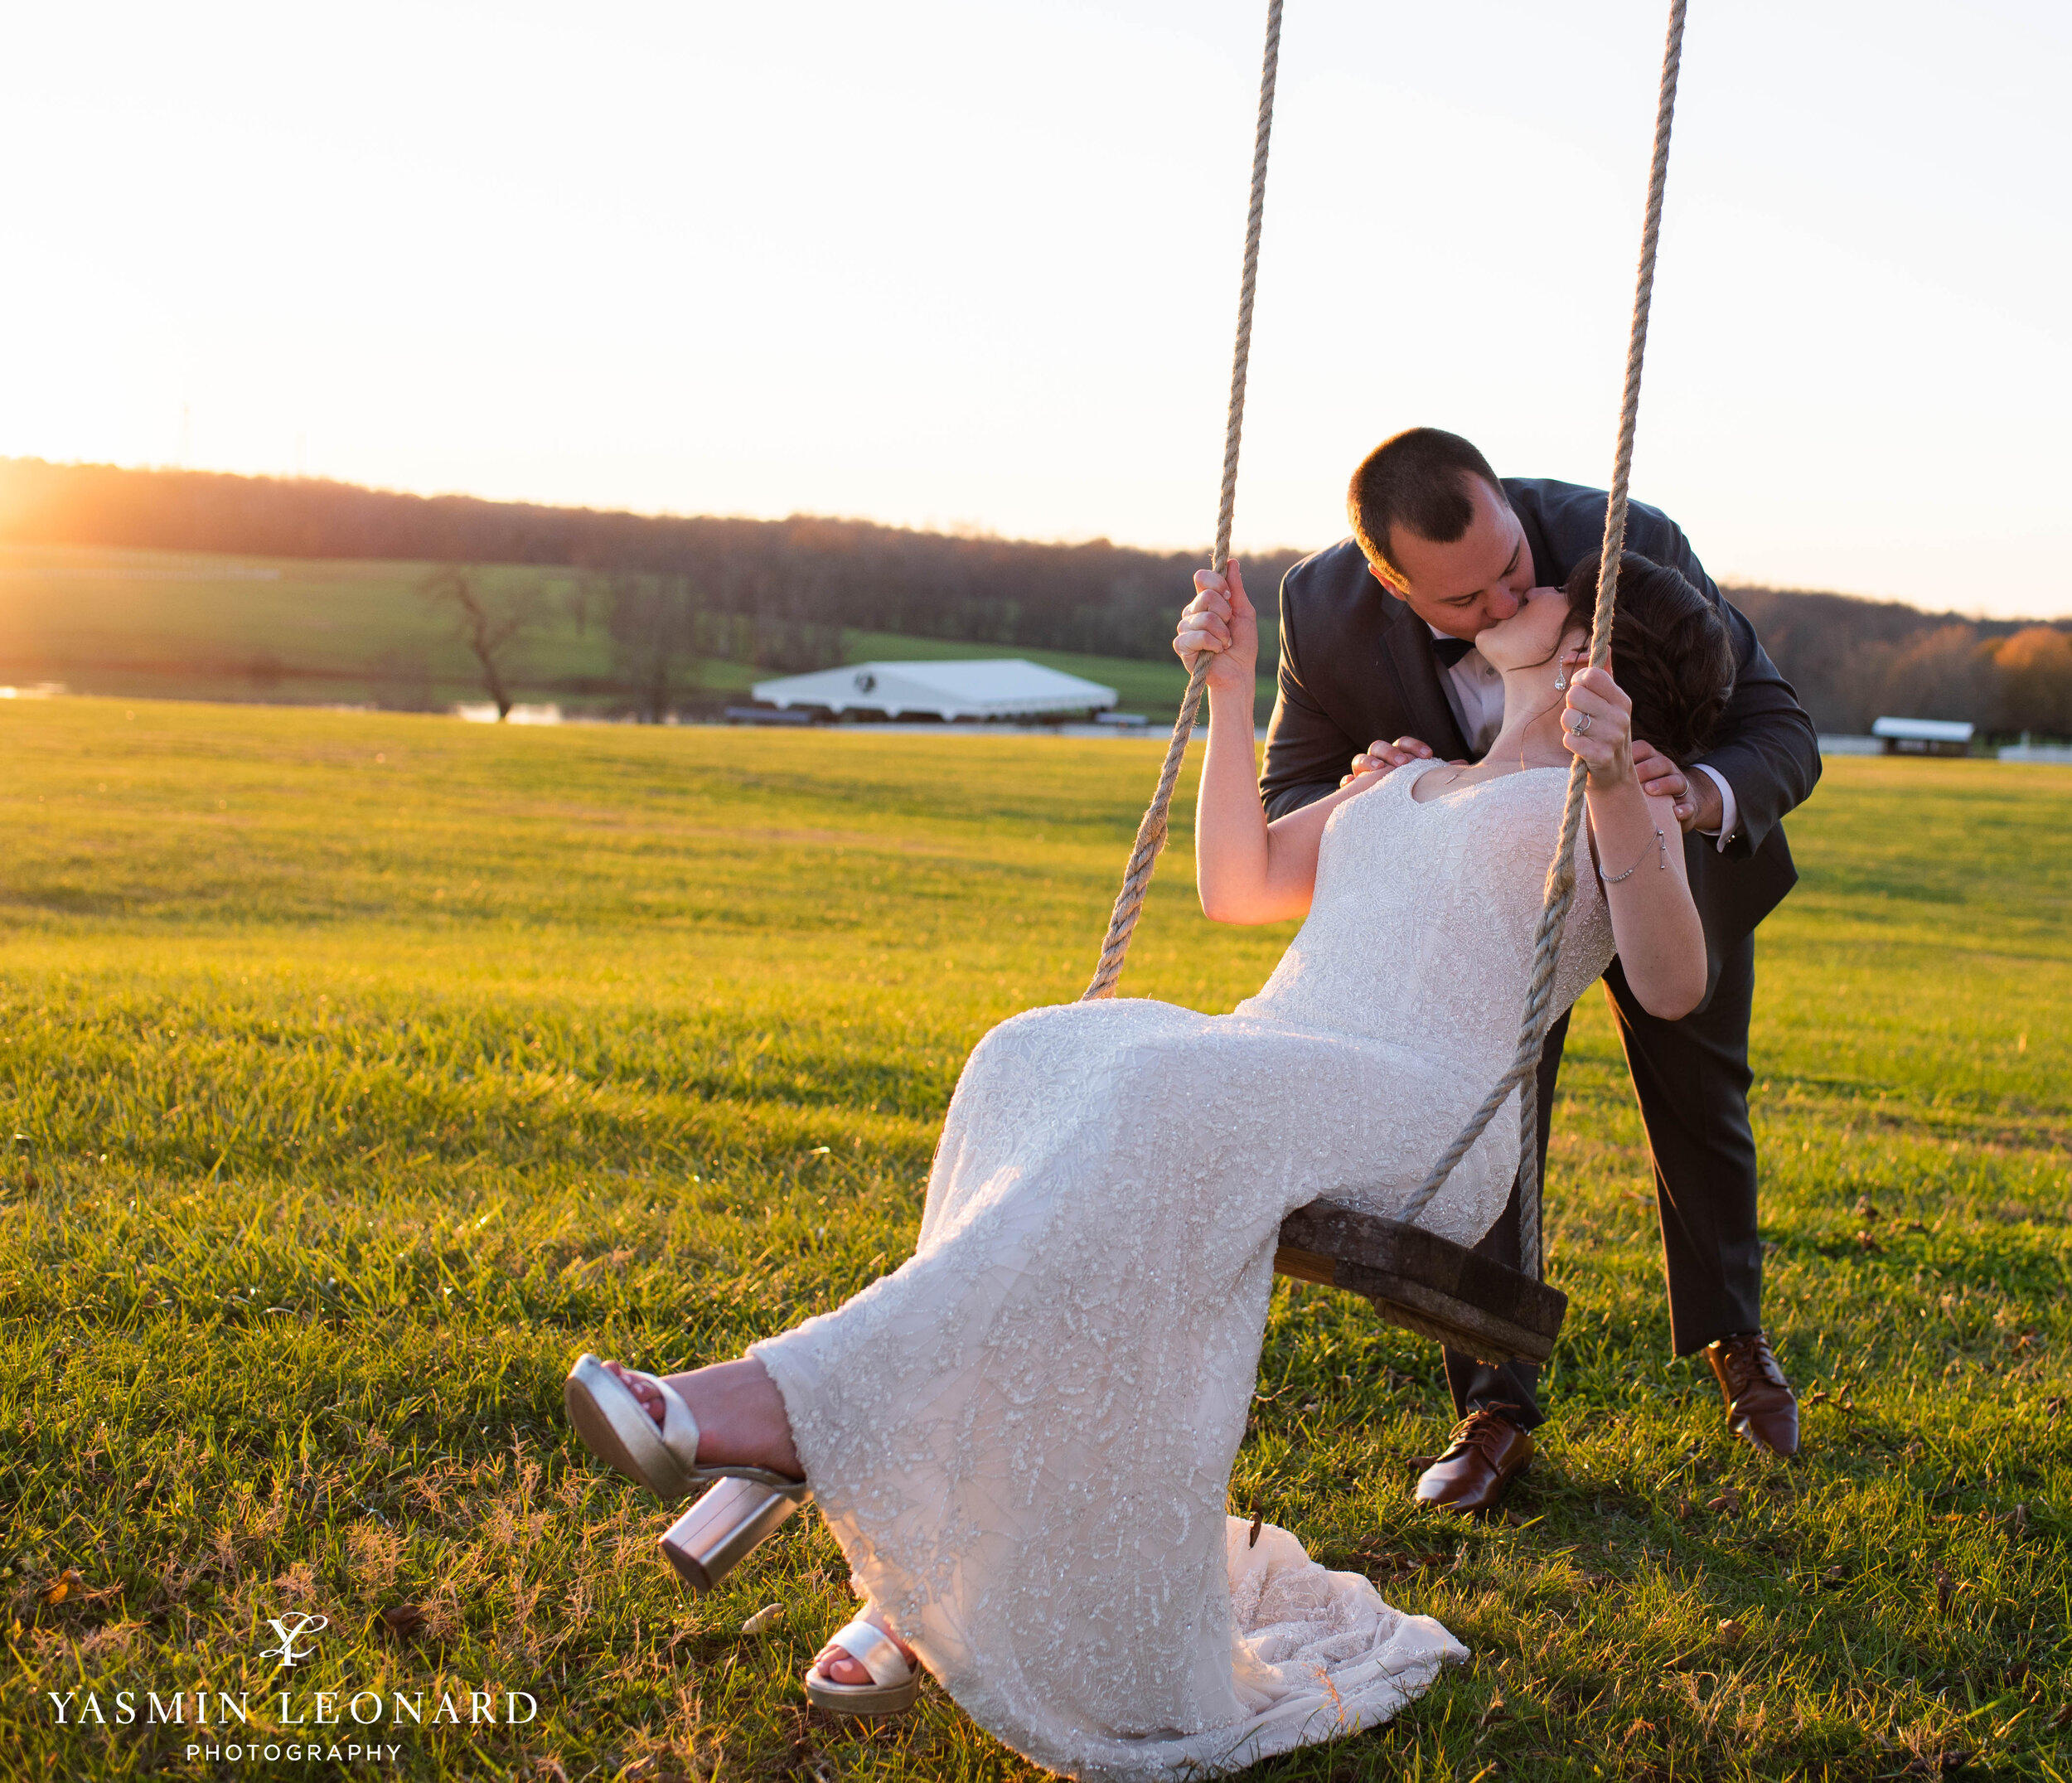 Jared and Katy - Adaumont Farms - High Point Weddings - NC Barn Weddings - Yasmin Leonard Photography-40.jpg